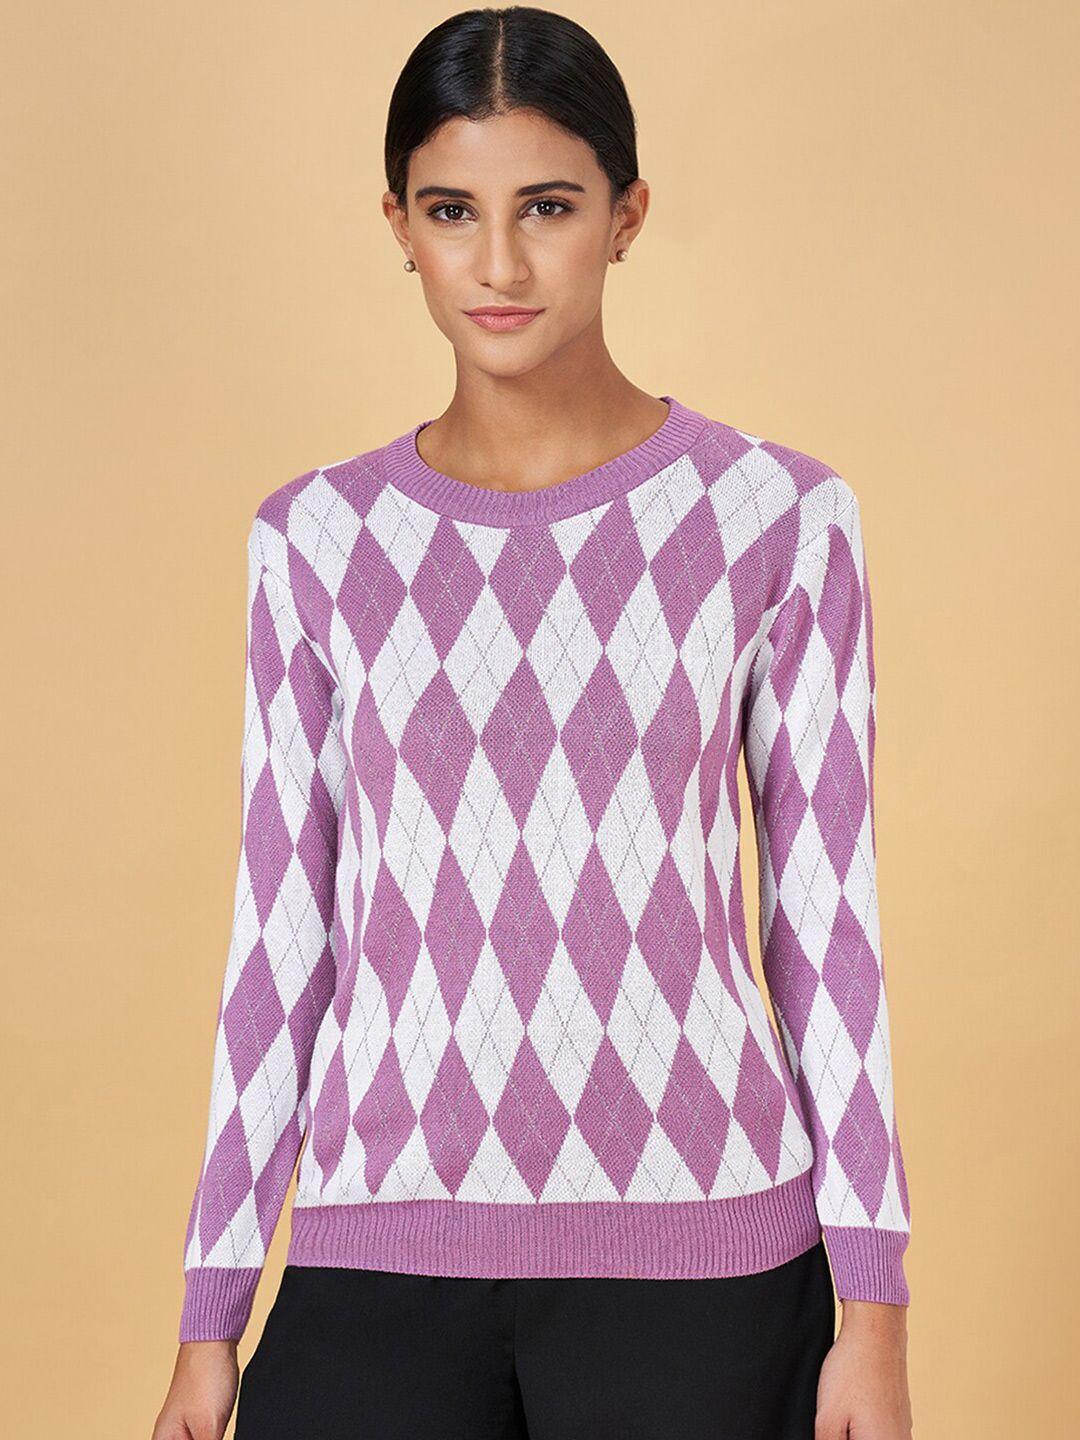 annabelle by pantaloons geometric pullover sweatshirt